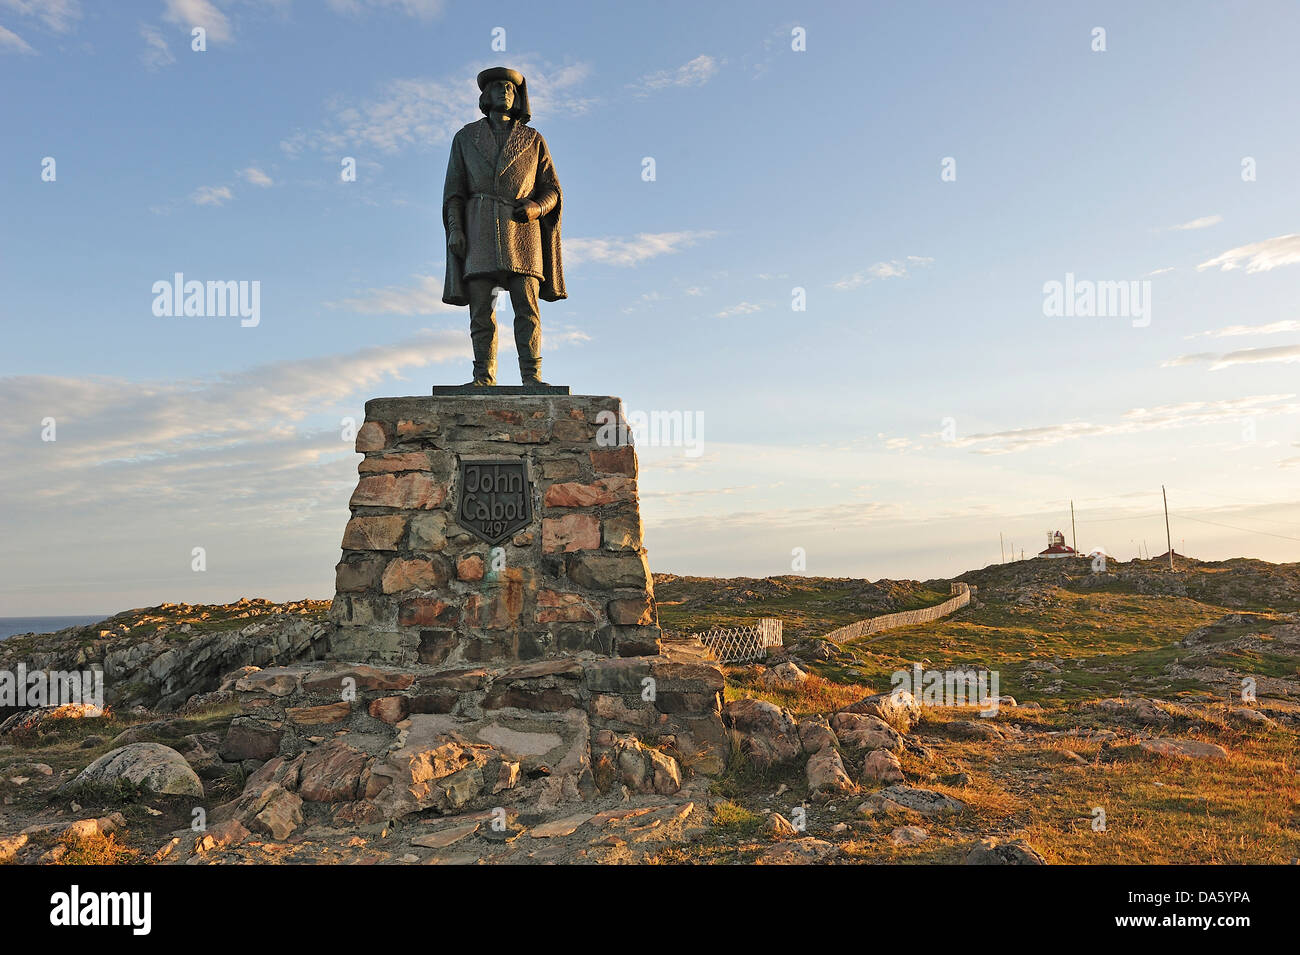 John Cabot, Cabot, statue, Bonavista, Terre-Neuve, Canada, Banque D'Images